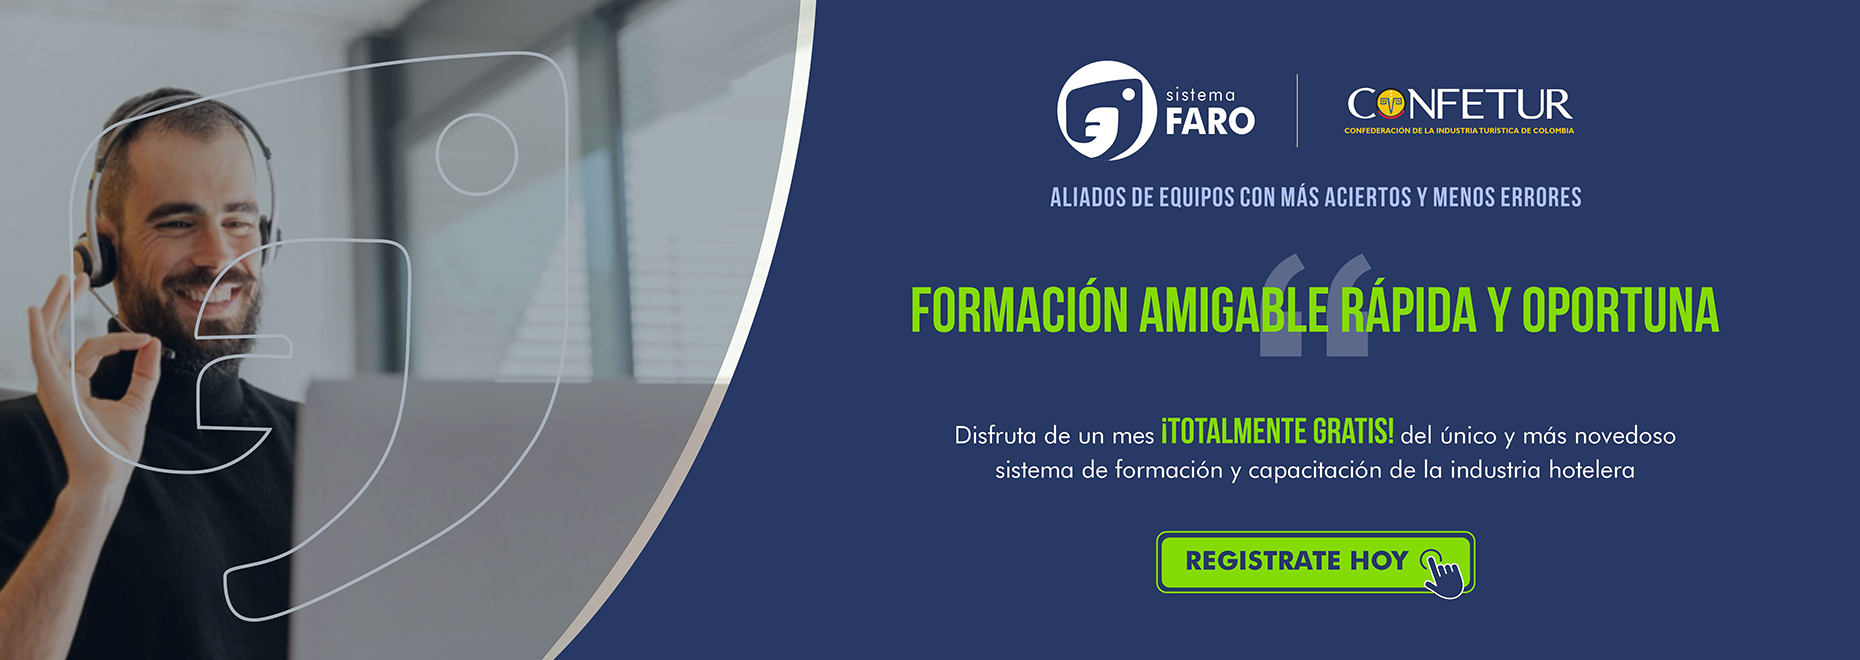 Banner Faro2 WEB